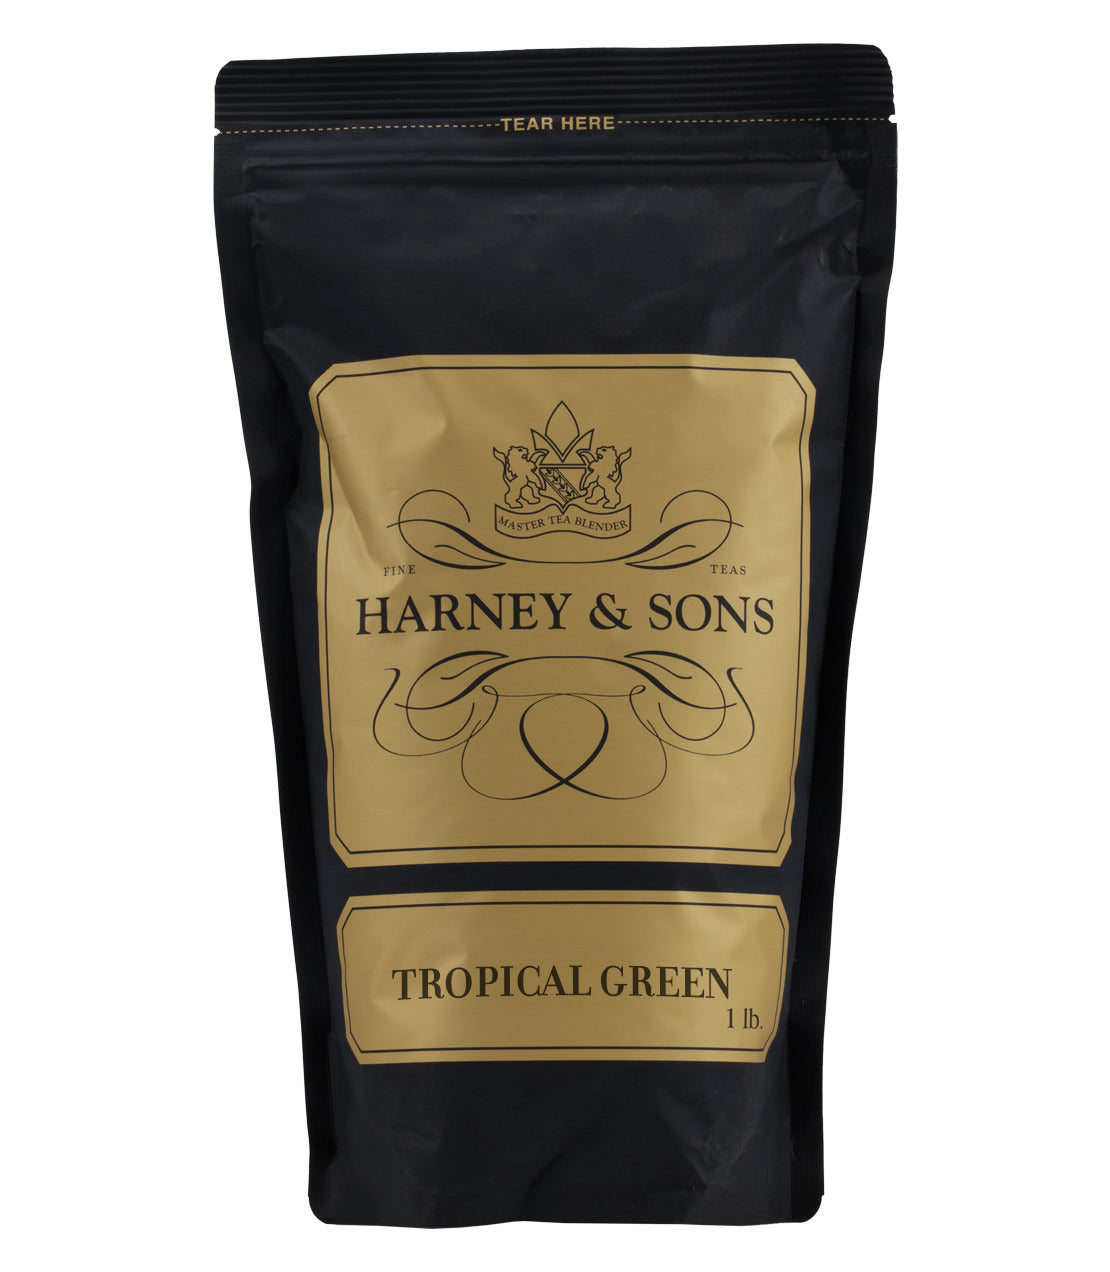 Tropical Green - Loose 1 lb. Bag - Harney & Sons Fine Teas